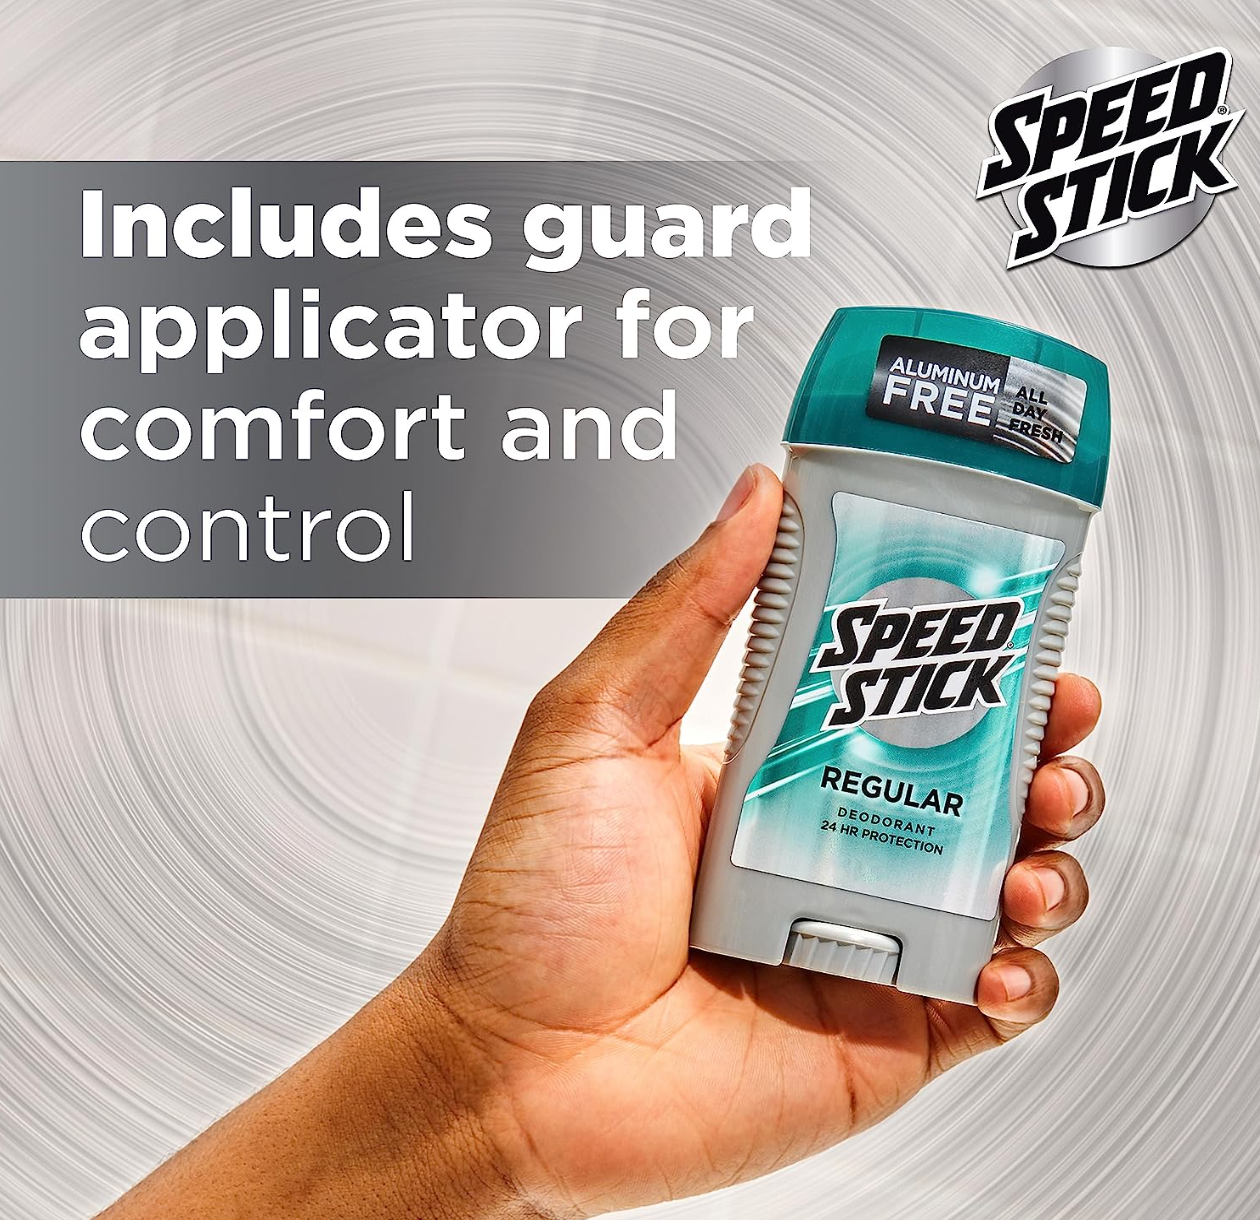 Speed Stick Men's Deodorant, Regular, 3 Ounce, 4 Pack